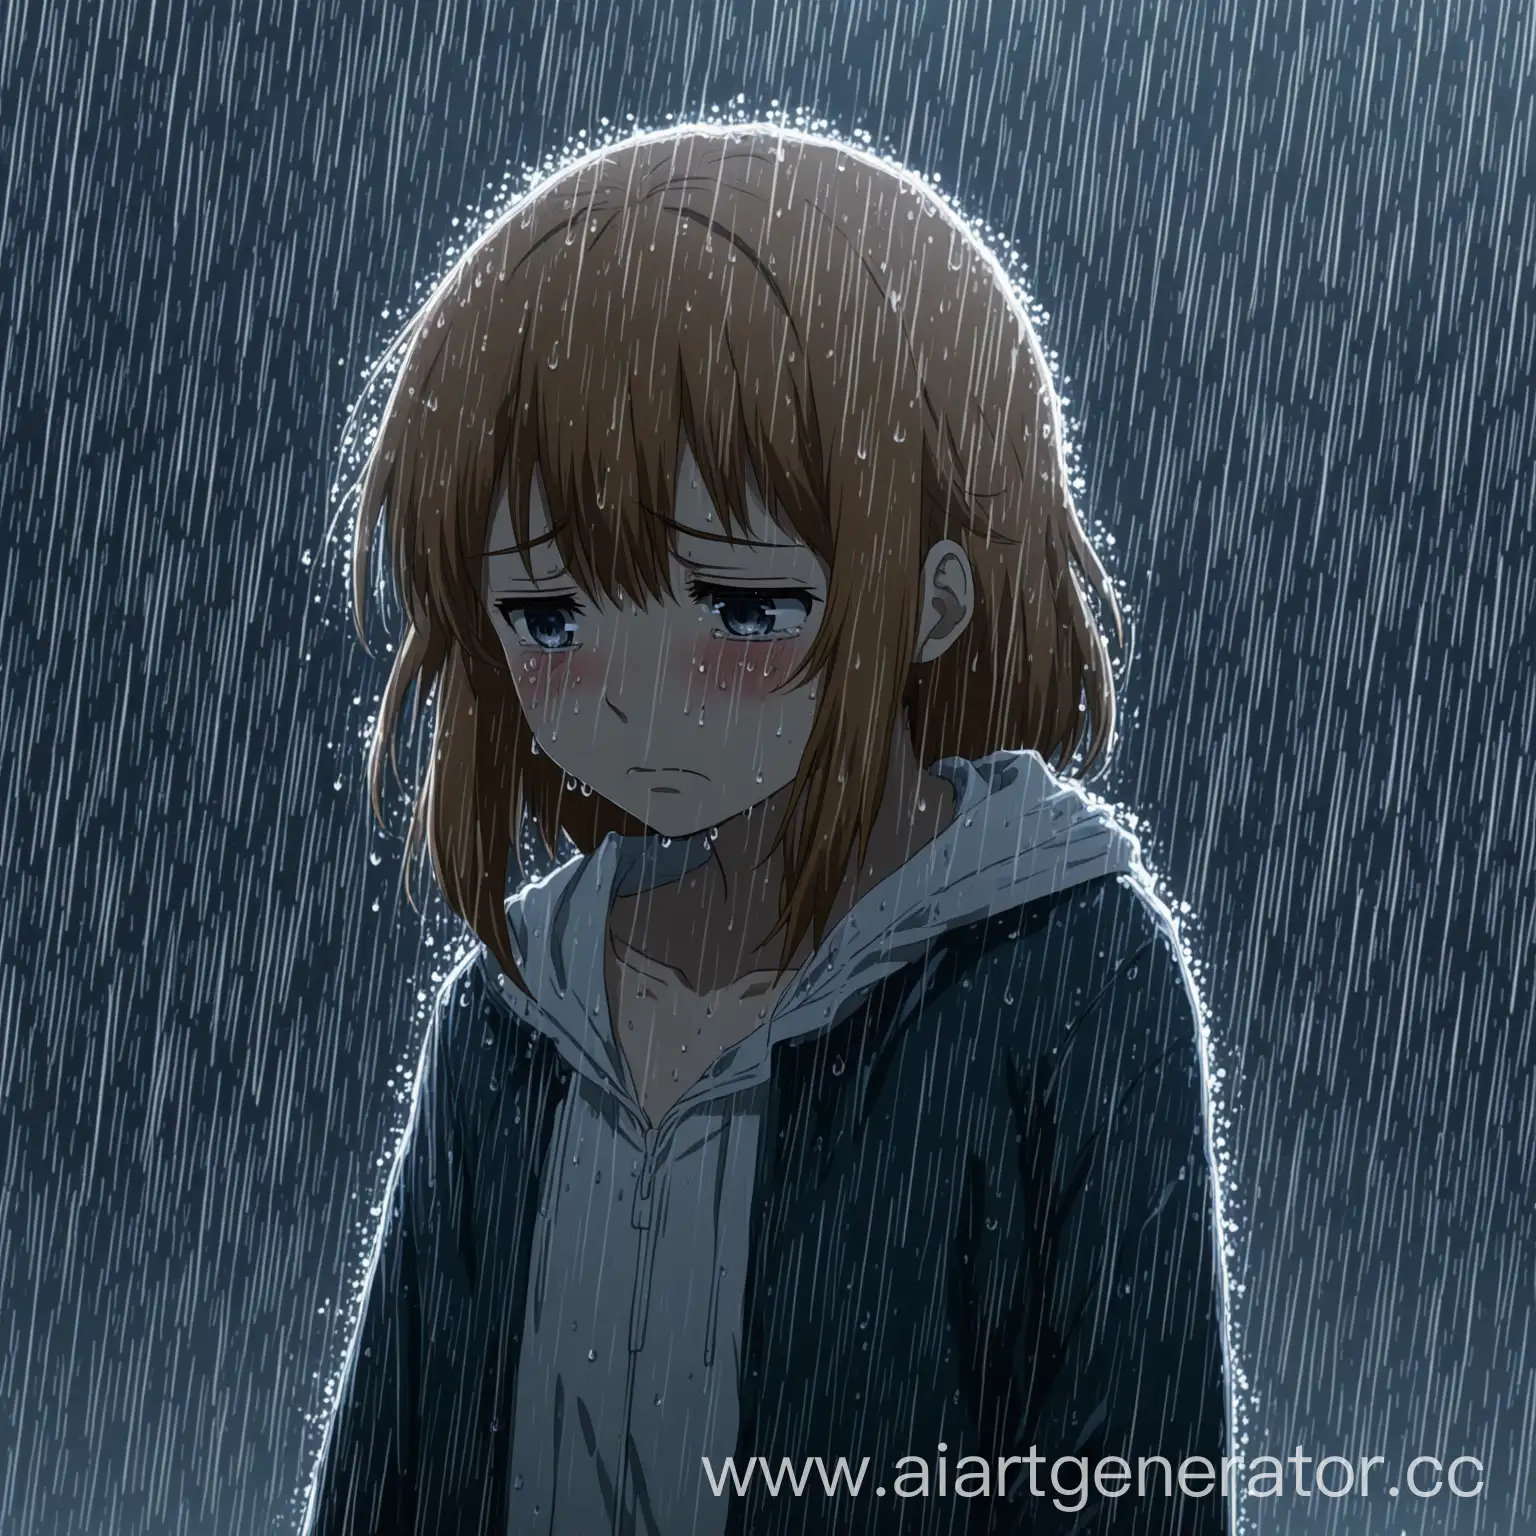 Sad anime girl crying standing in the rain
